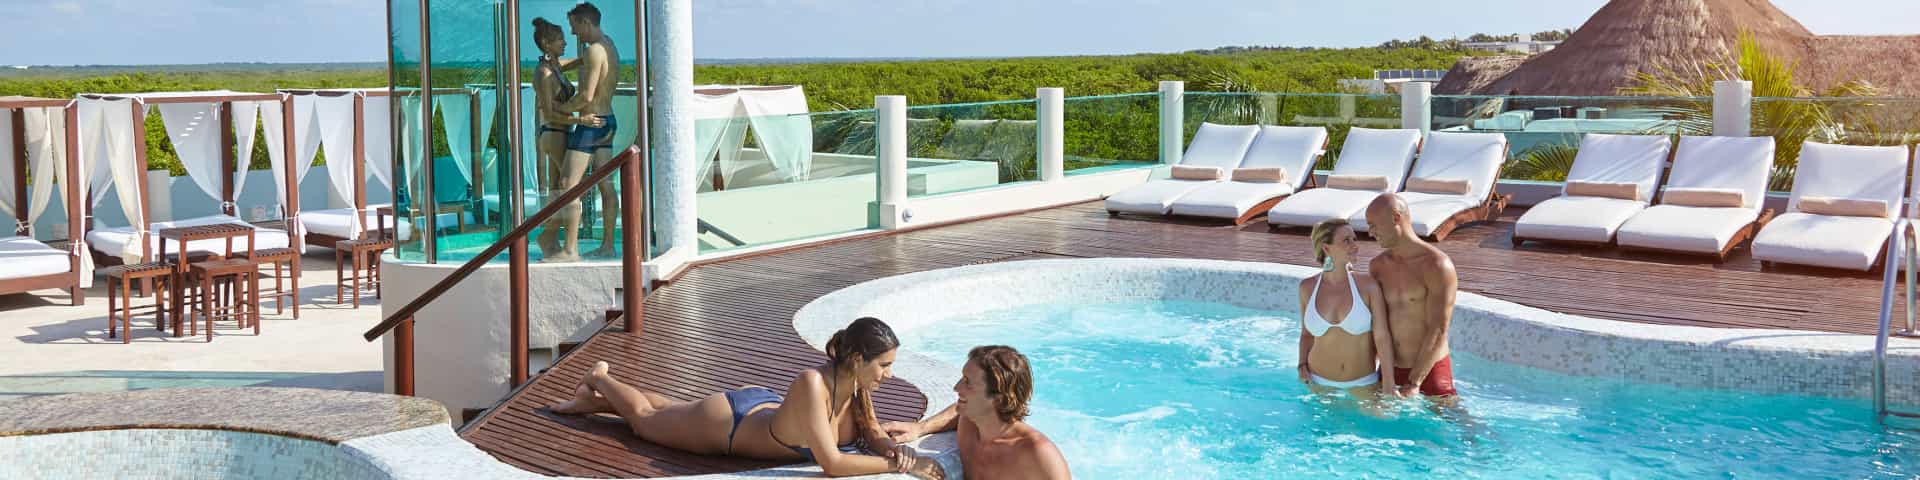 Rooftop Jacuzzi Lounge at Desire Resort Riviera Maya. 